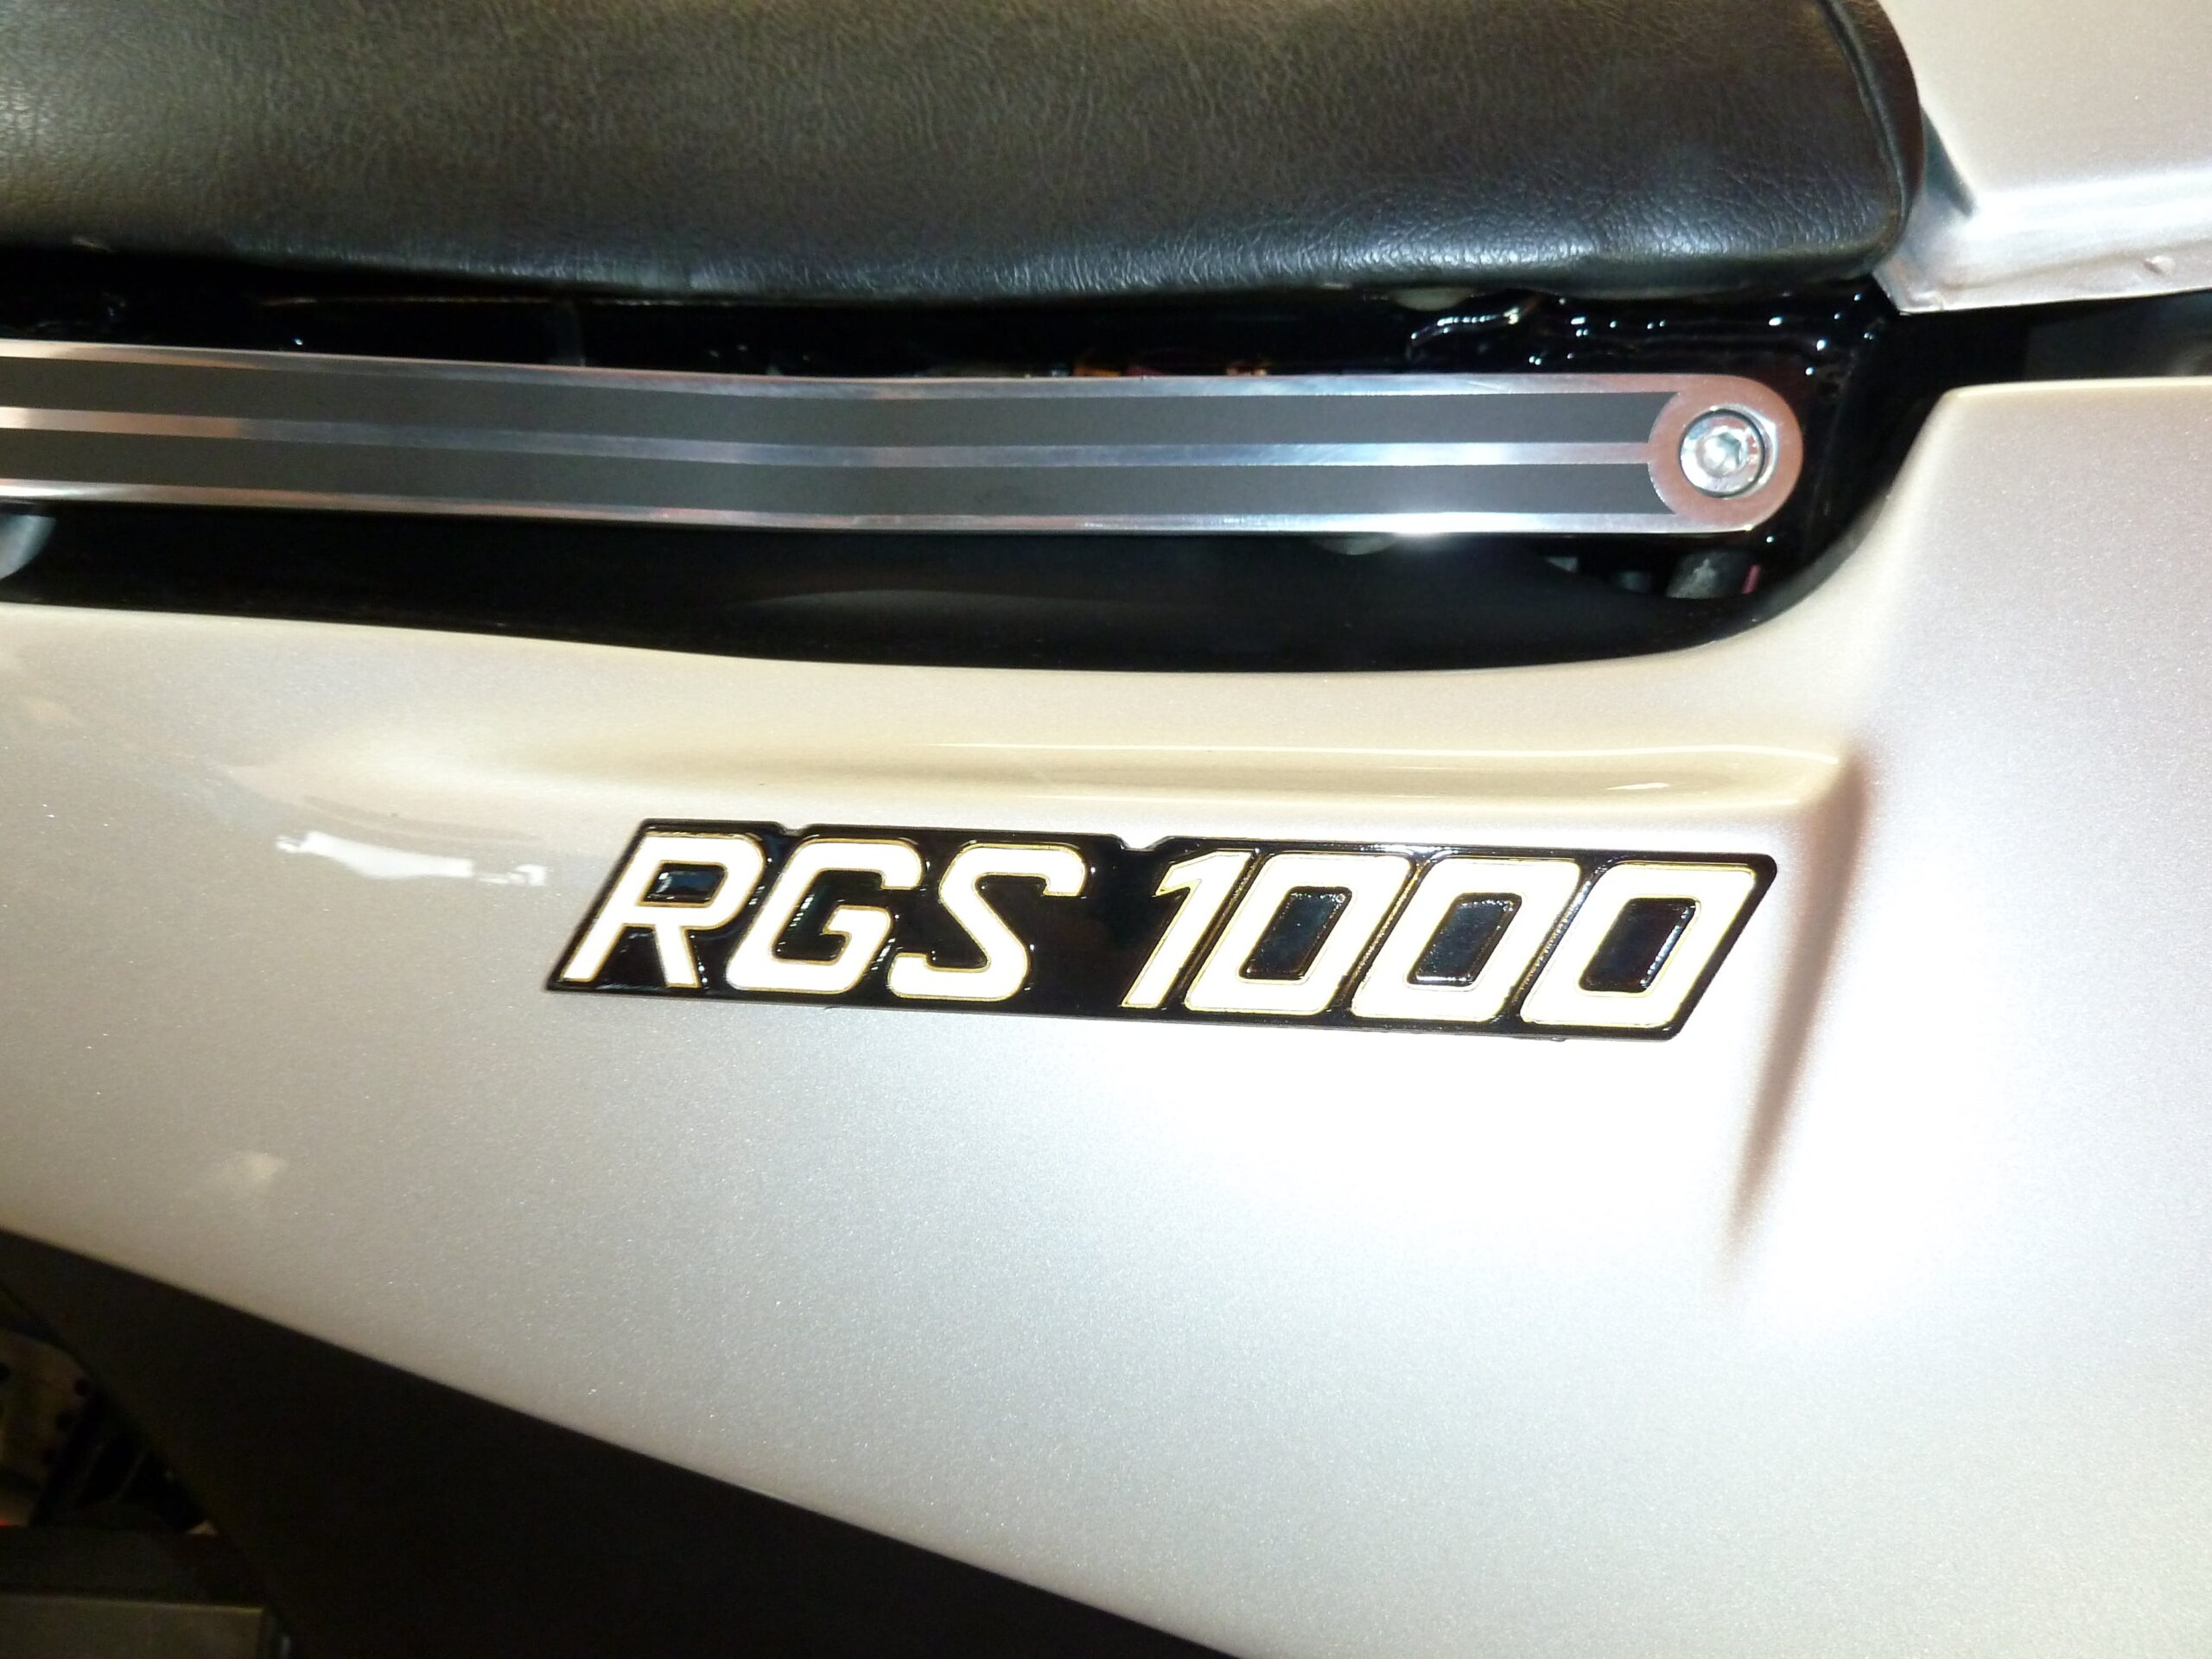 Laverda RGS 1000